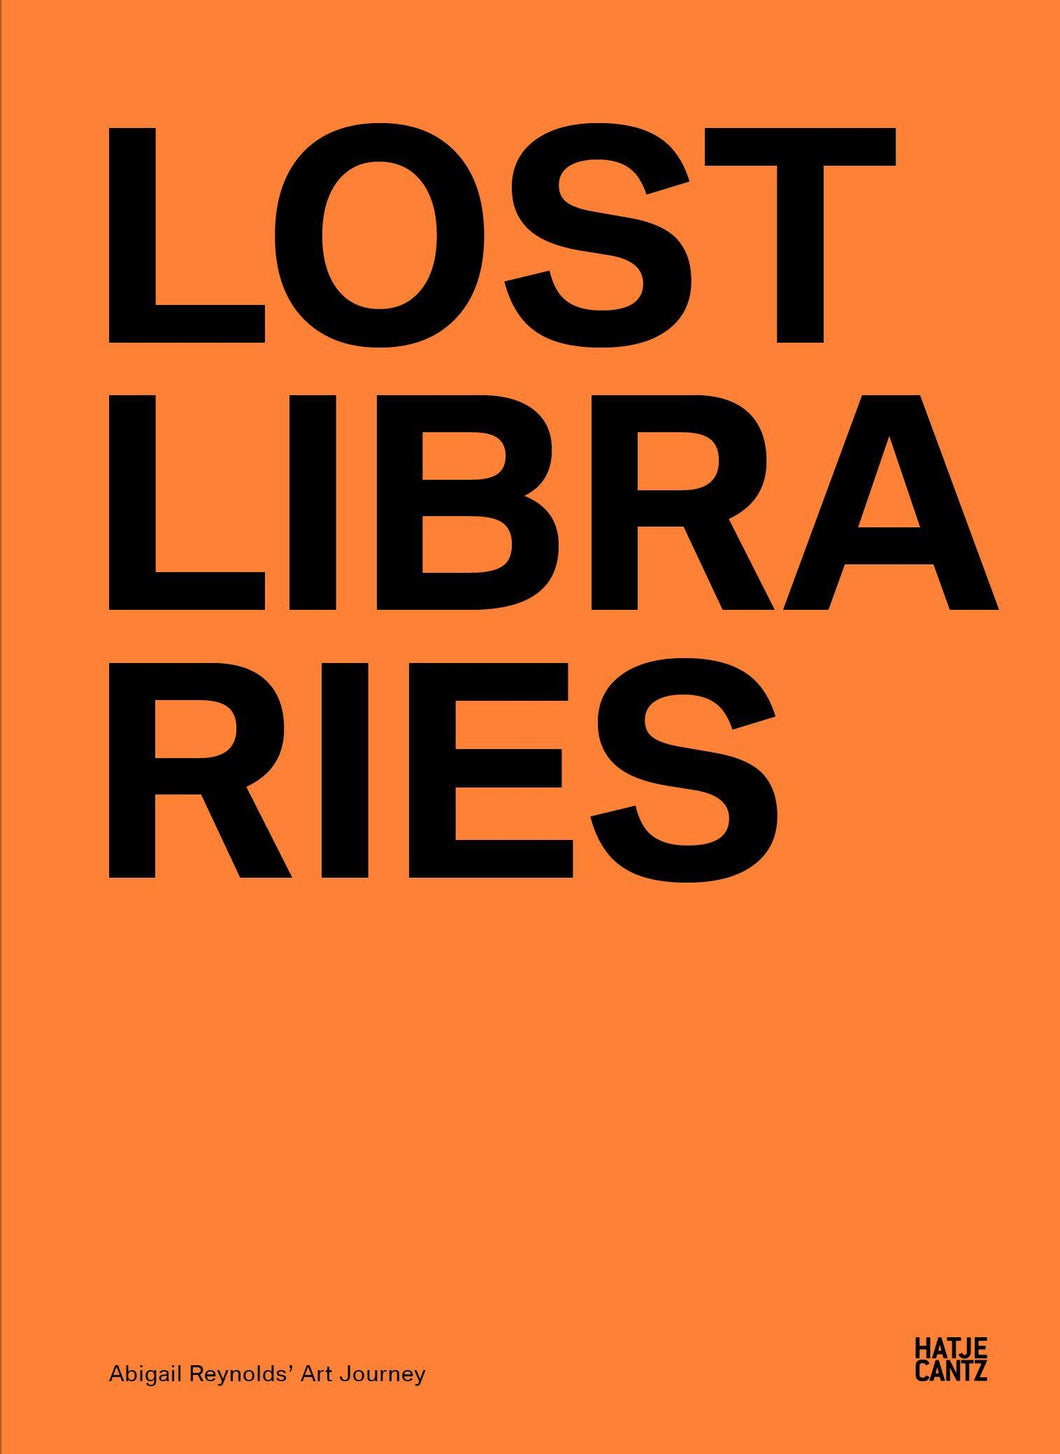 Lost Libraries - Abigail Reynolds' Art Journey